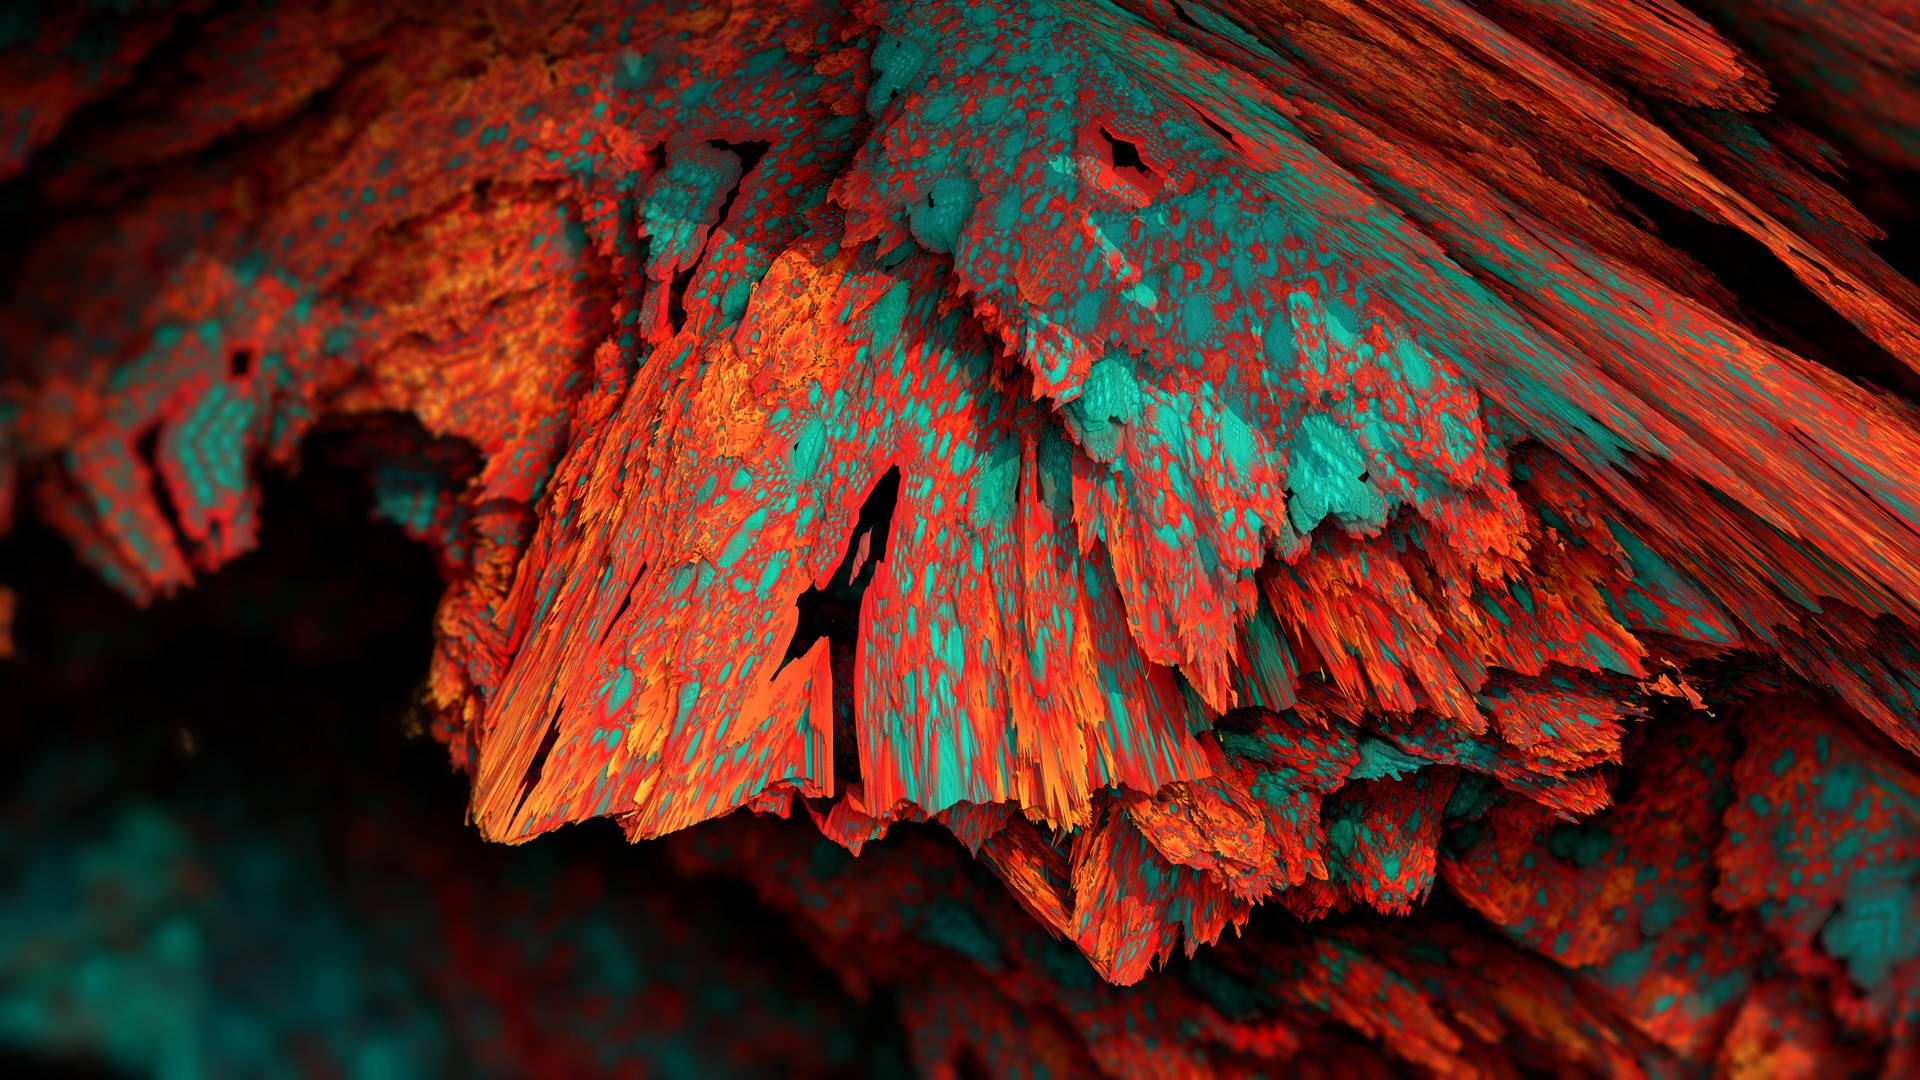 Procedural Minerals Mineral Colorful Abstract Digital Art Artwork CGi Render 1920x1080